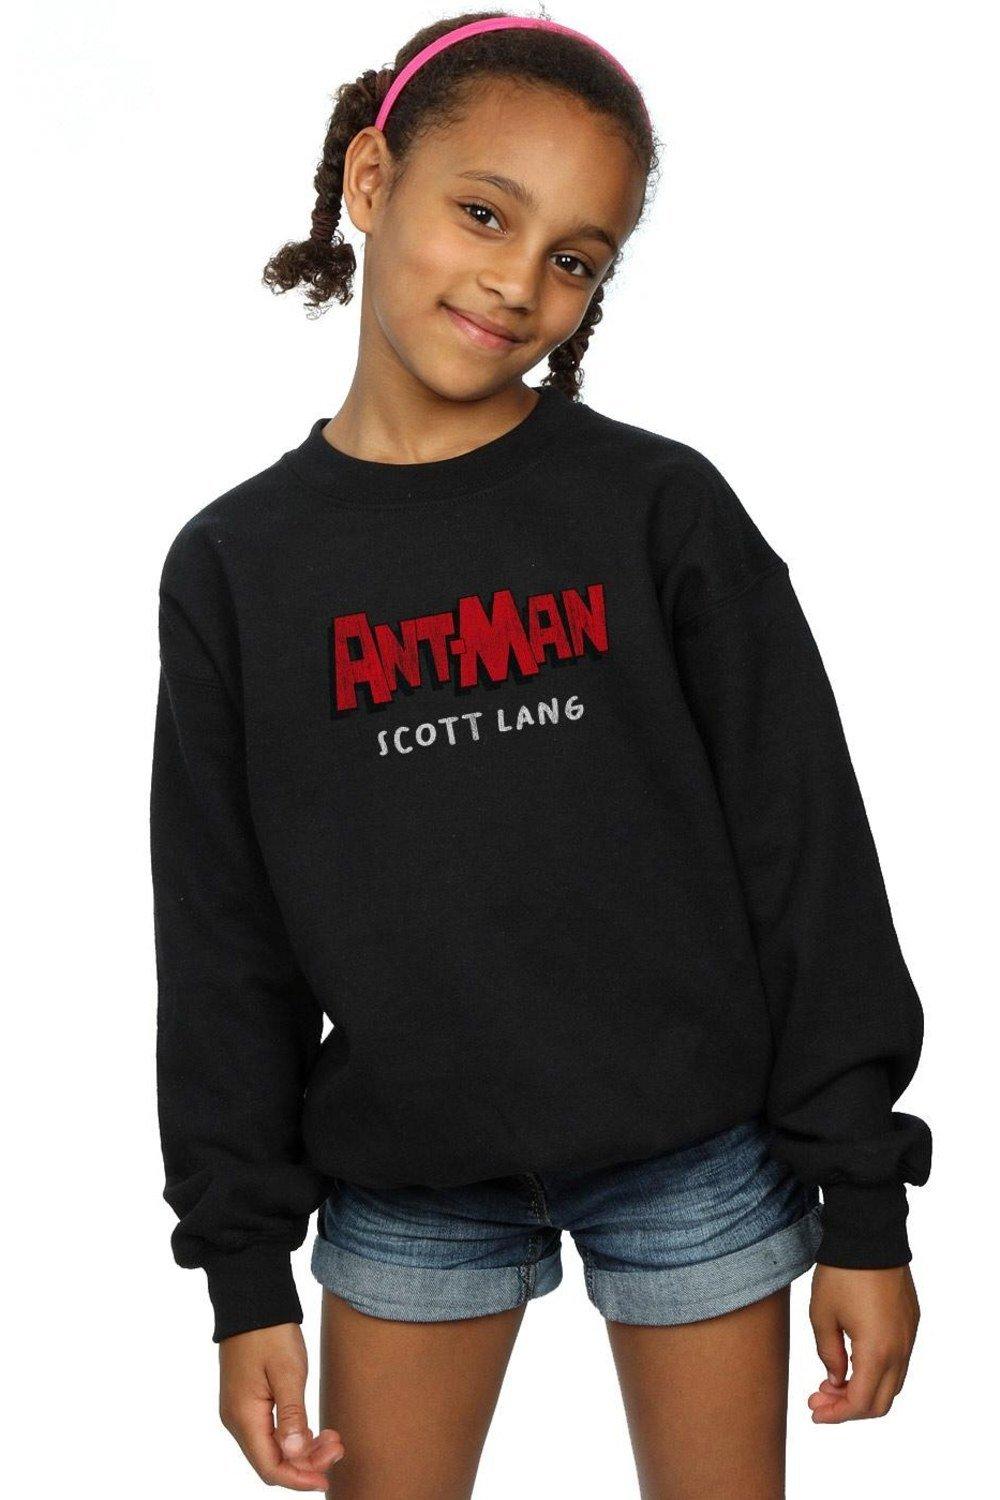 Ant-Man AKA Scott Lang Sweatshirt